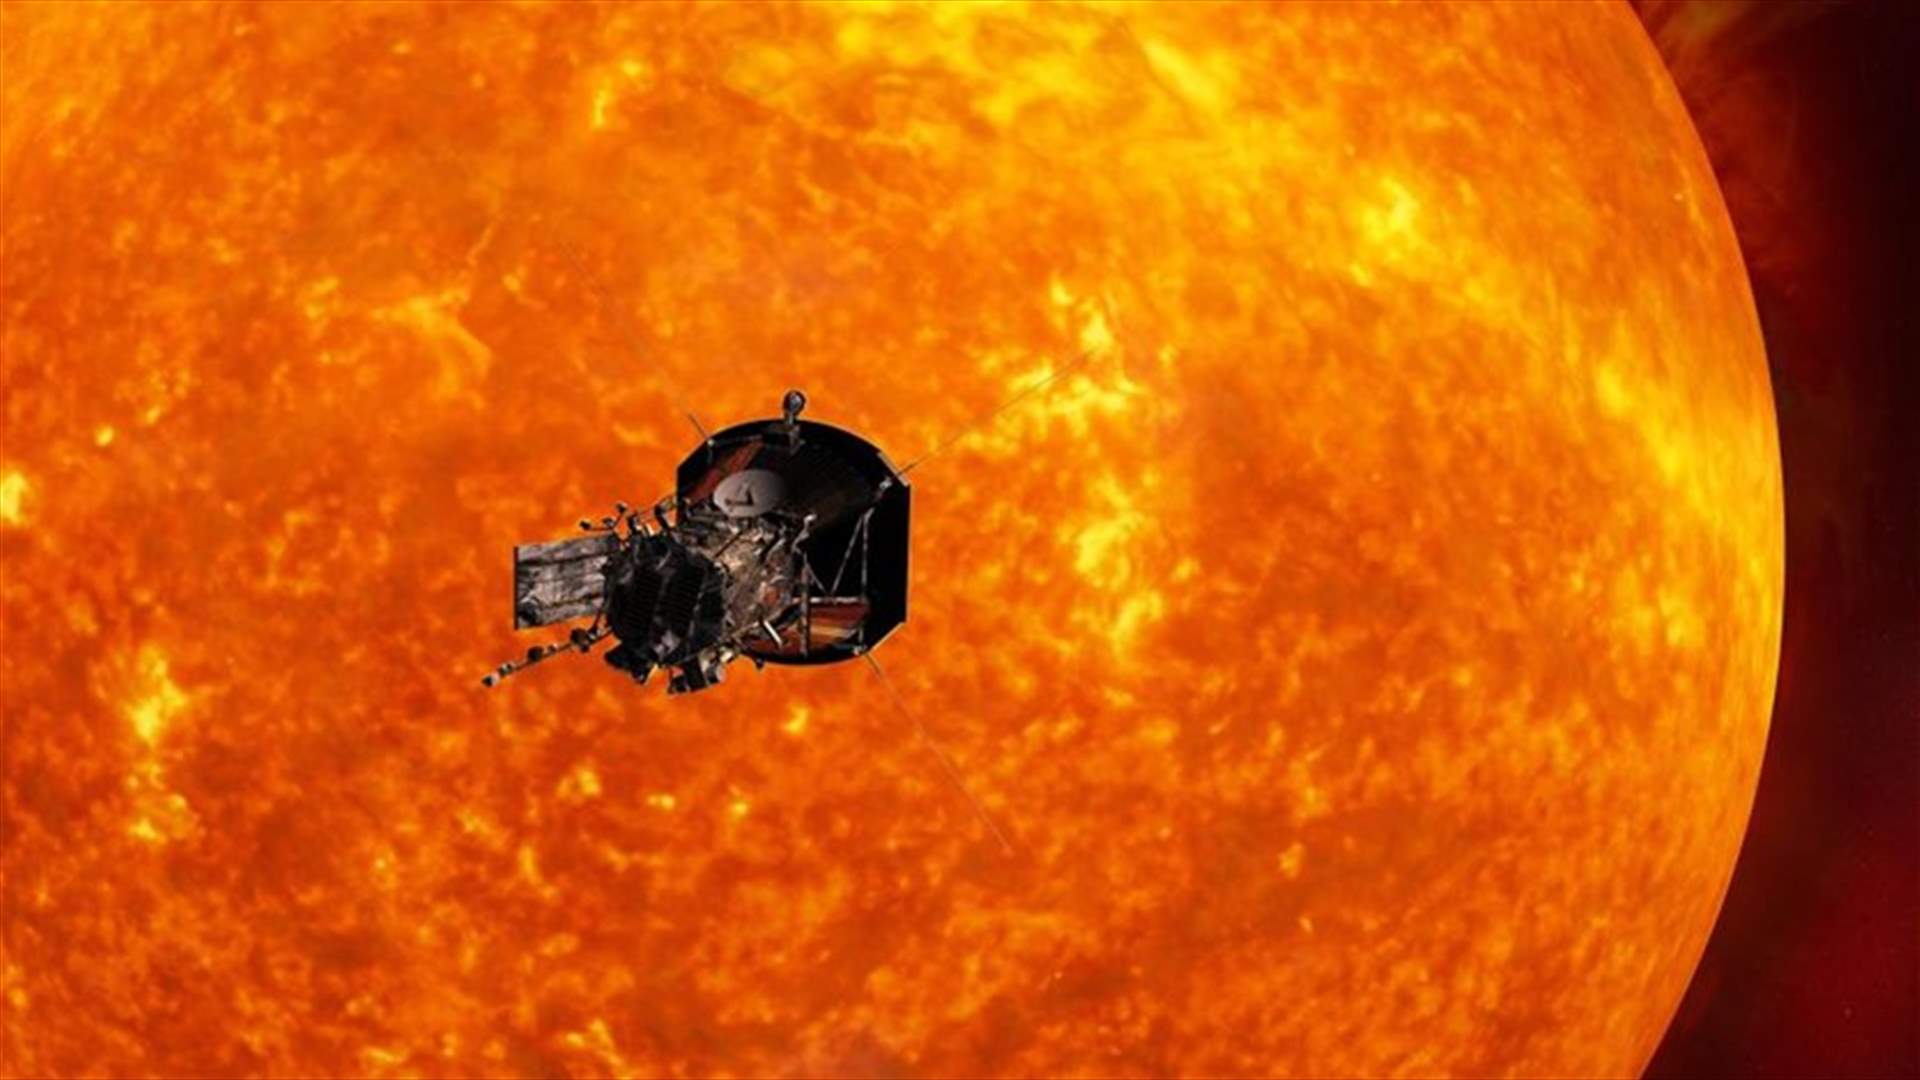 NASA To Send Solar Probe Plus On Mission To Study The Sun